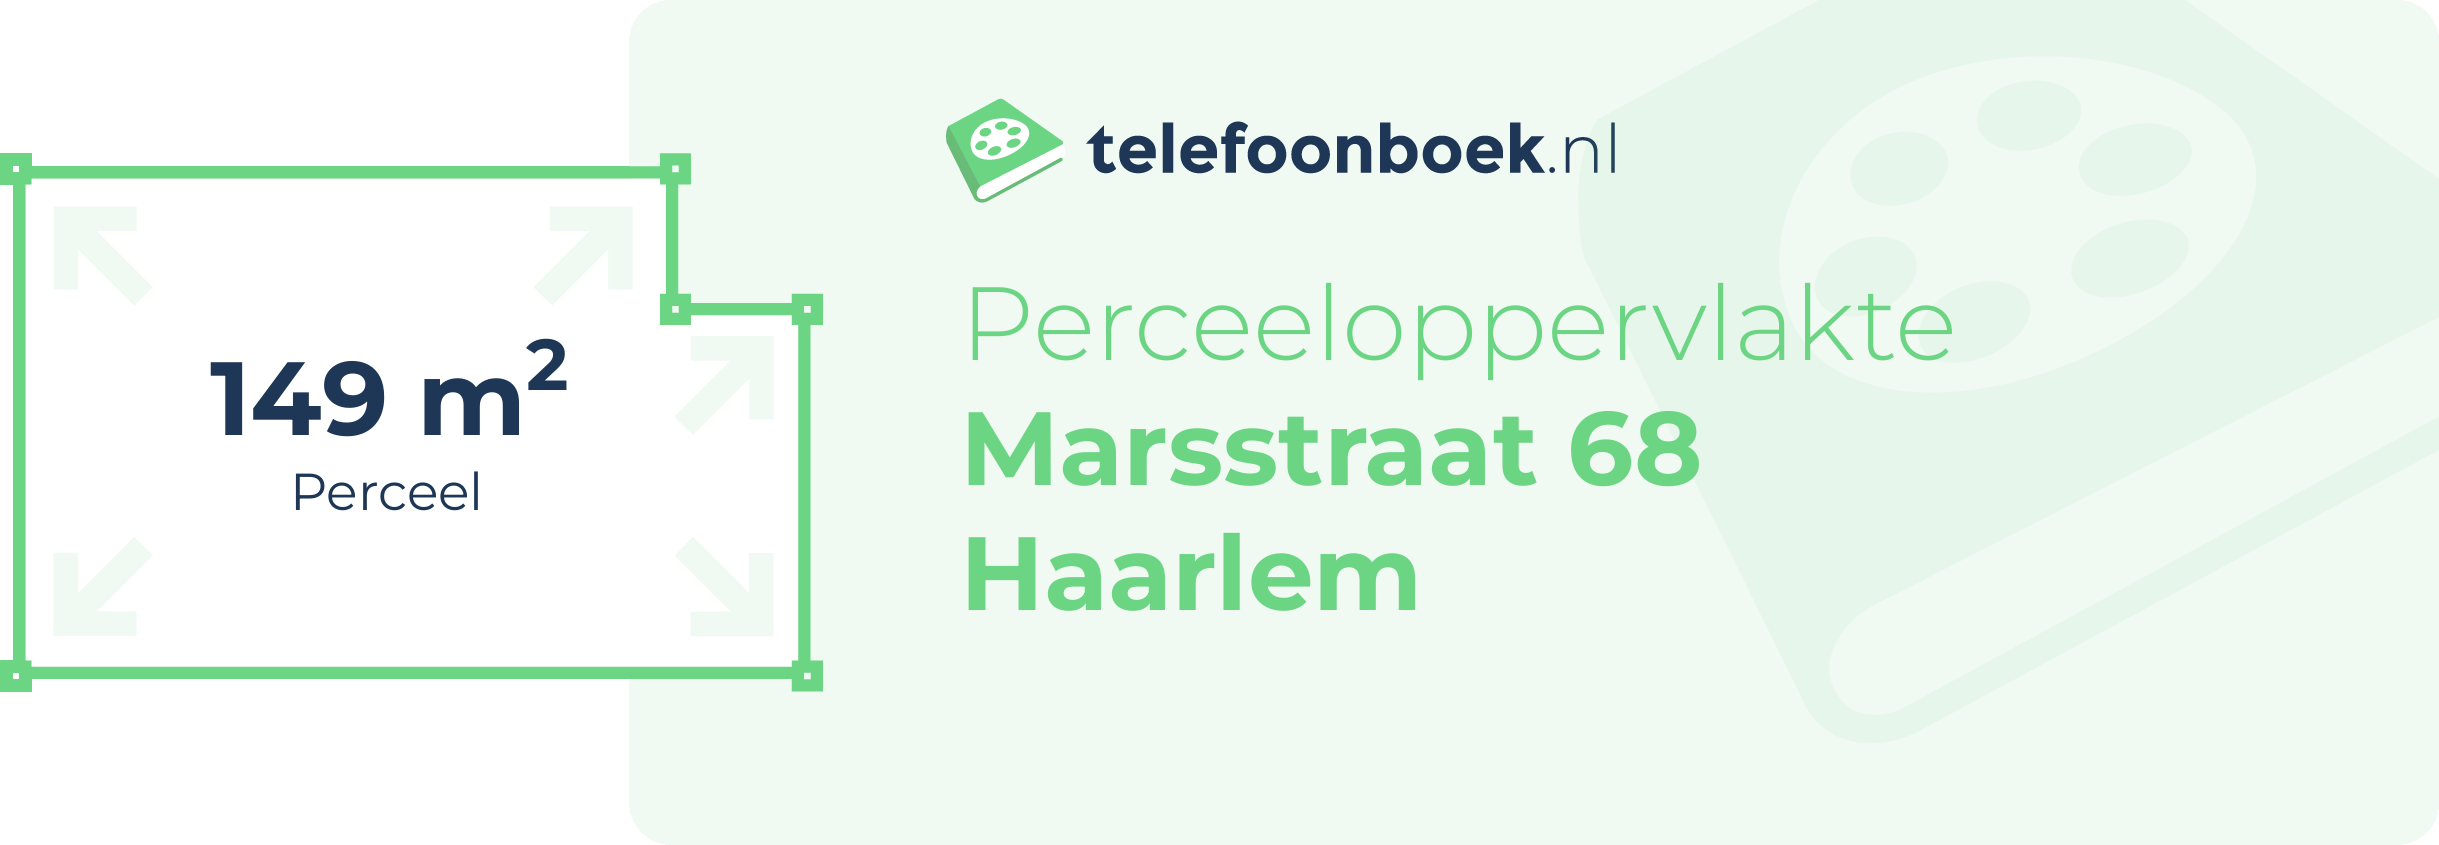 Perceeloppervlakte Marsstraat 68 Haarlem